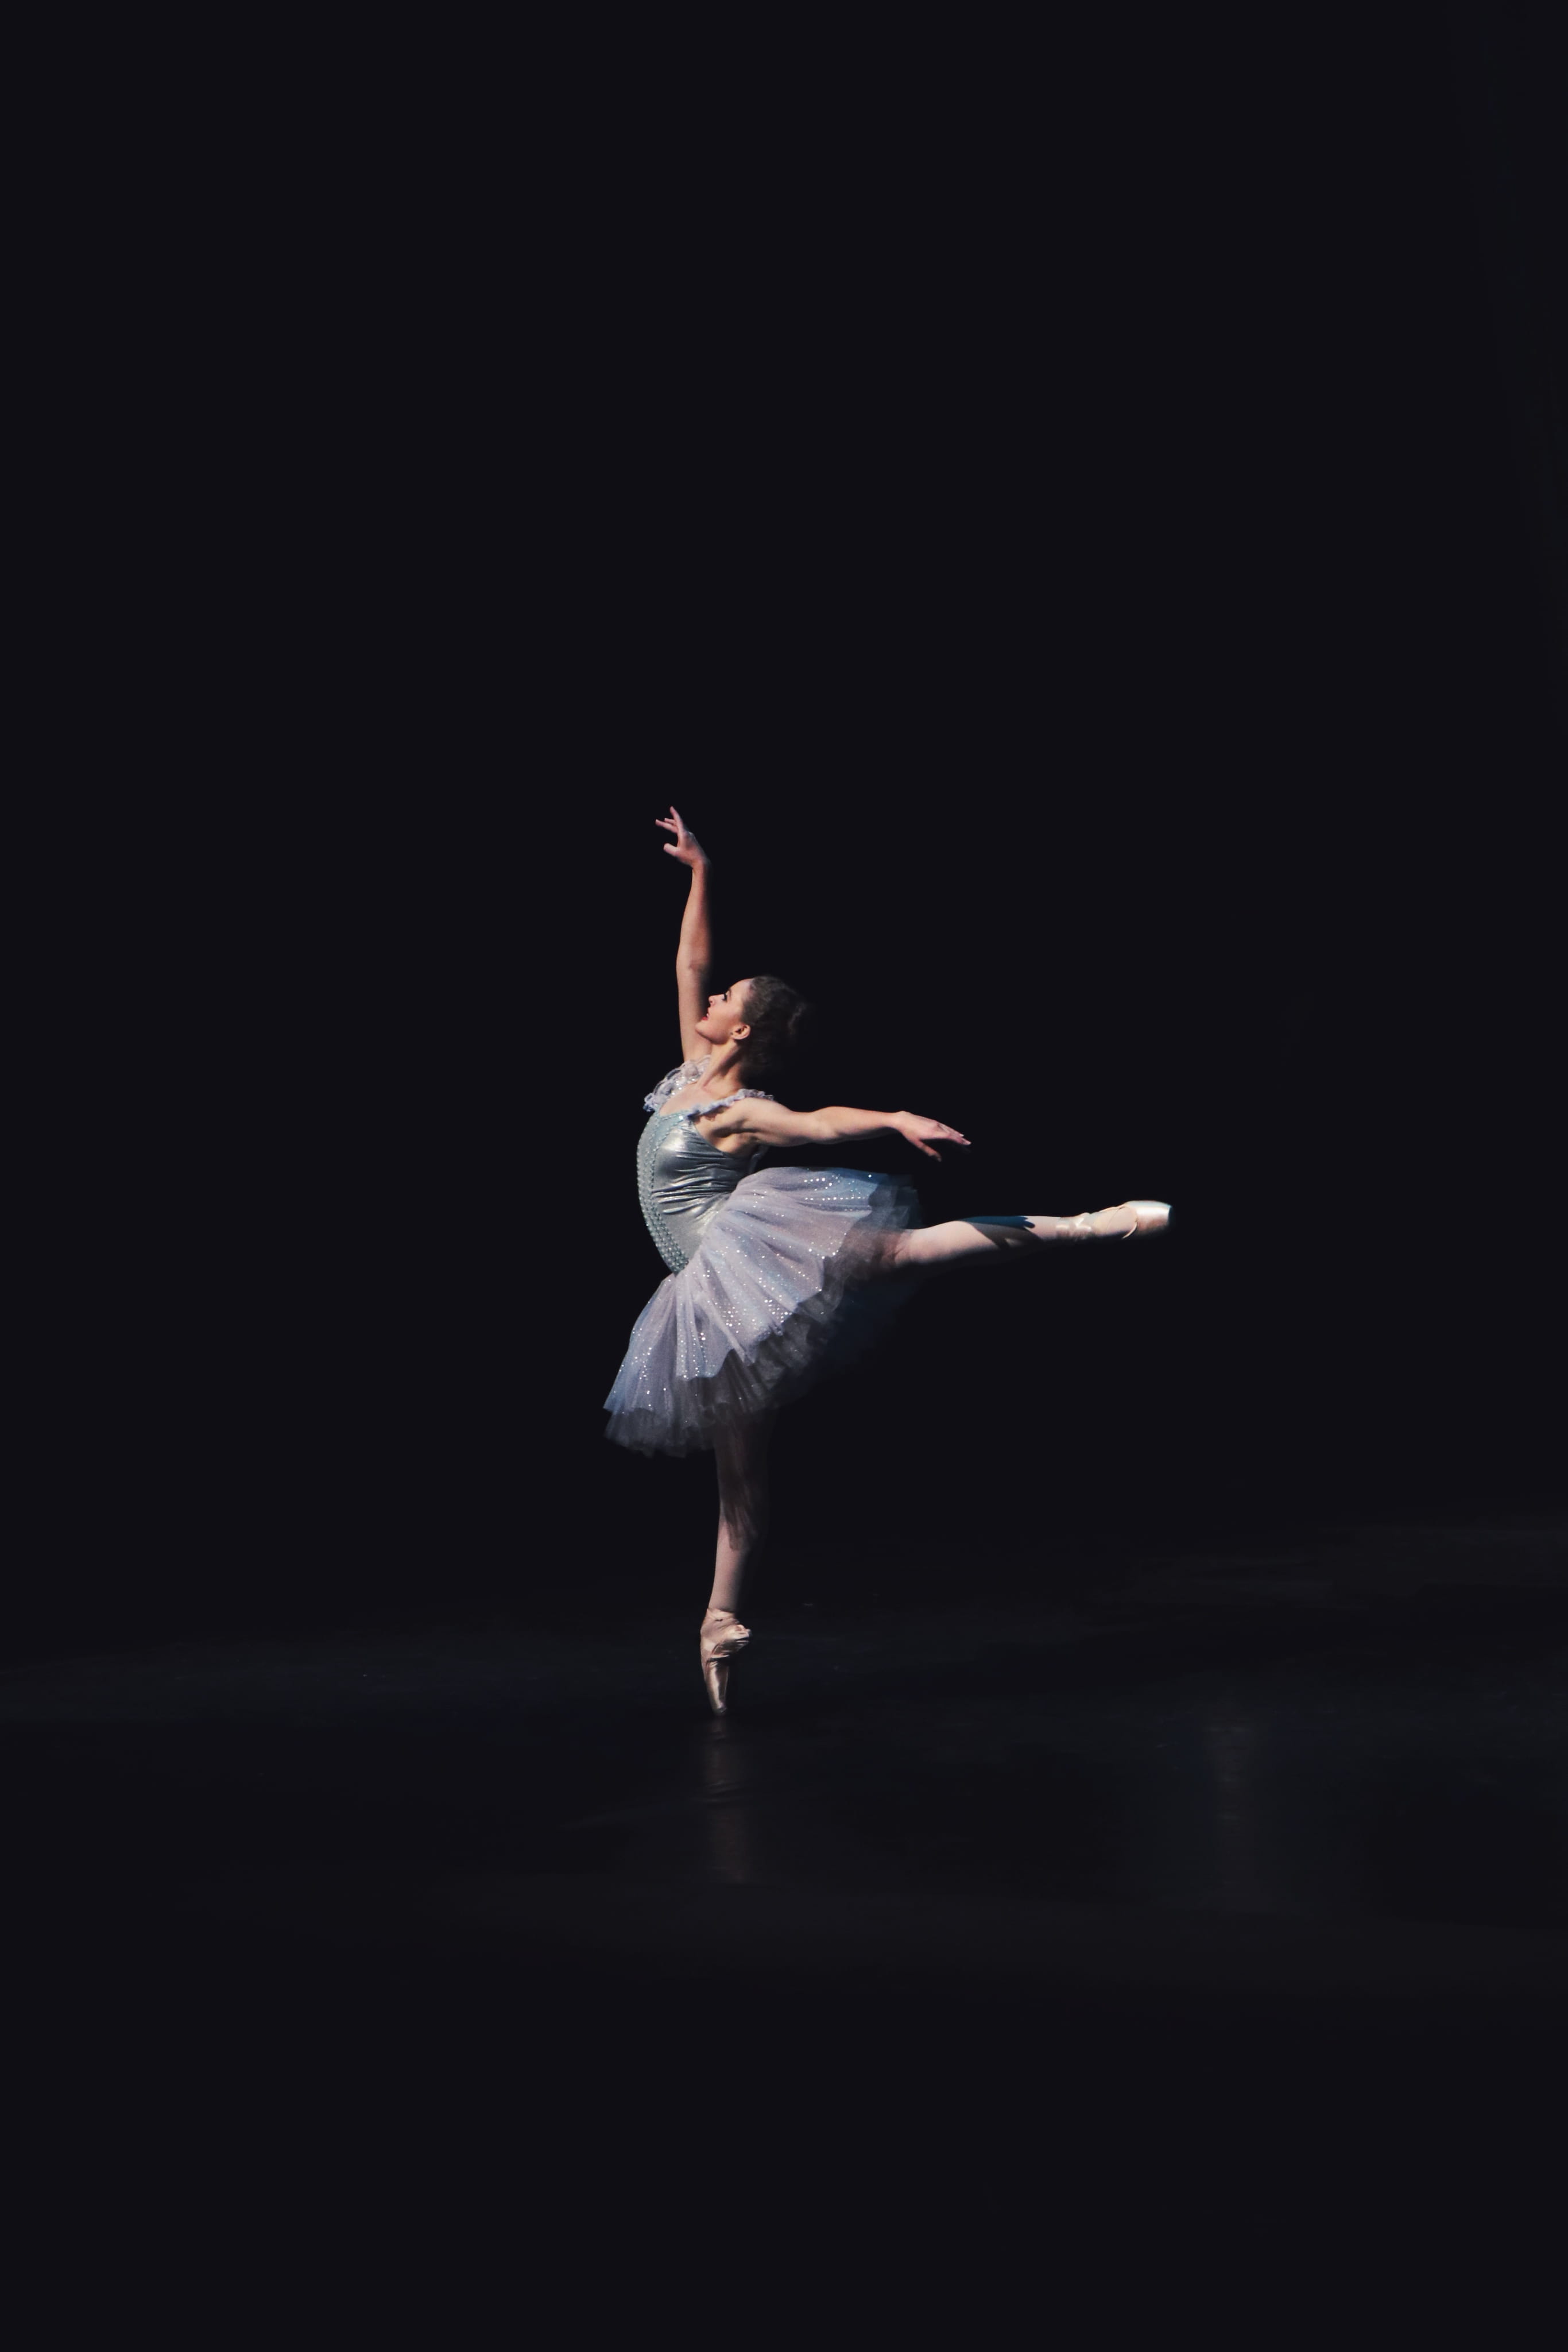 photography of dancing ballerina, ballerina pointing her hand upward